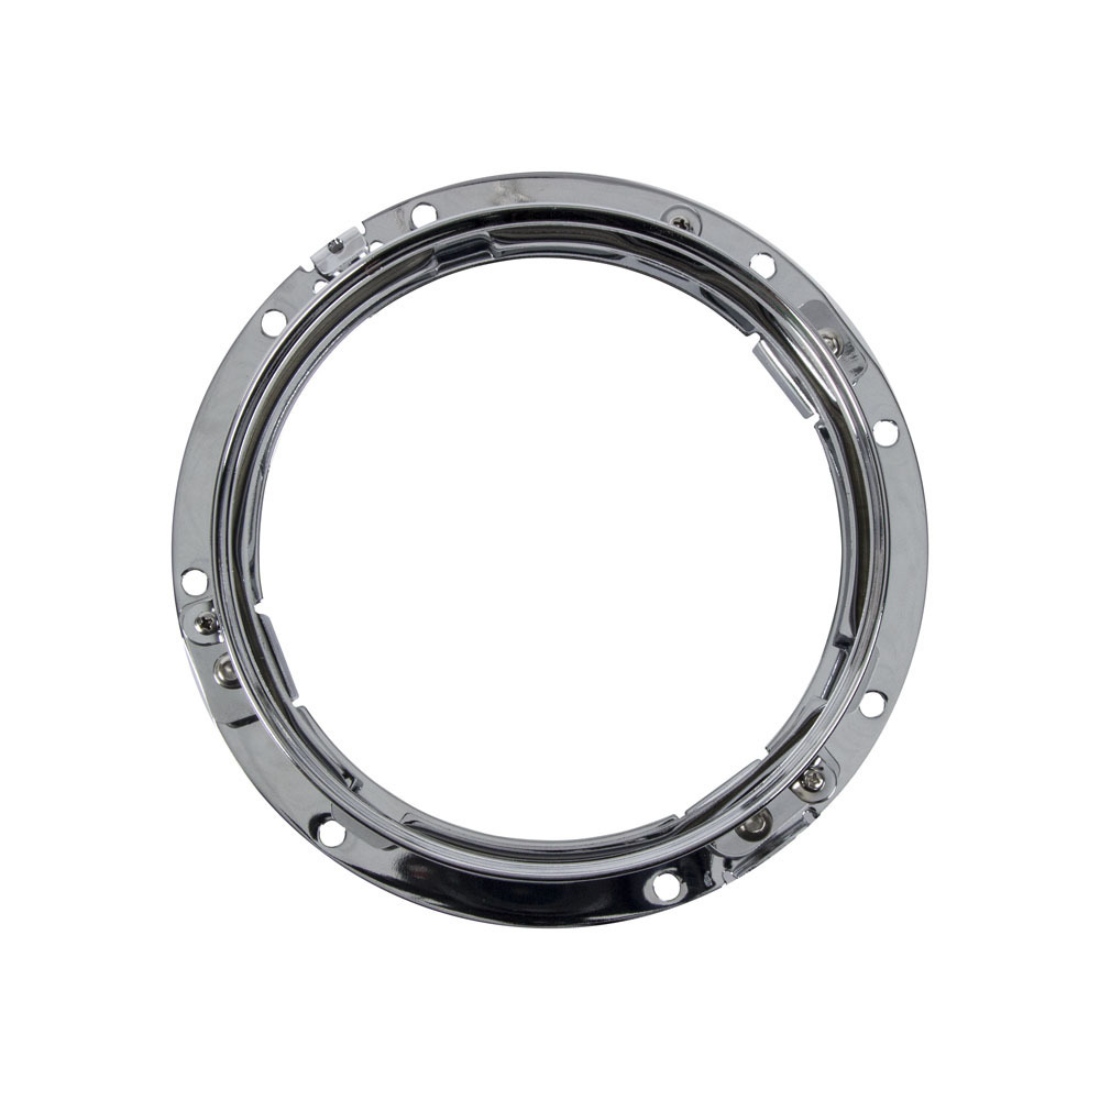 Metra BC-HB7 7-Inch Chrome Retaining Ring for Harley-Davidson 2013 & Older